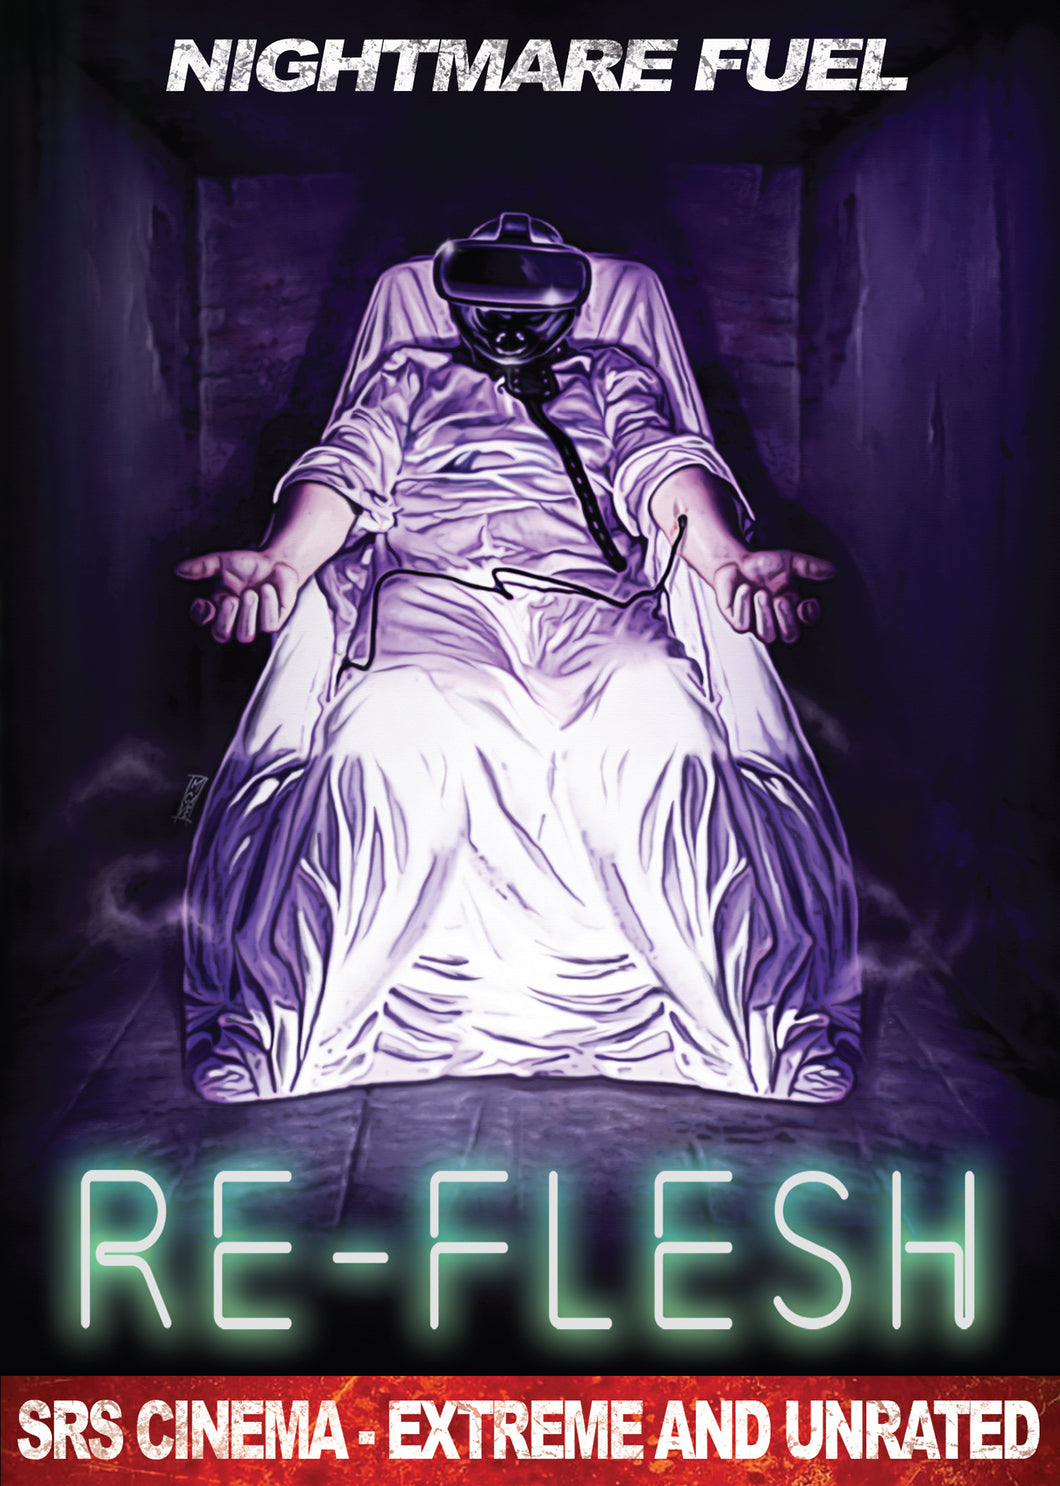 Re-flesh DVD